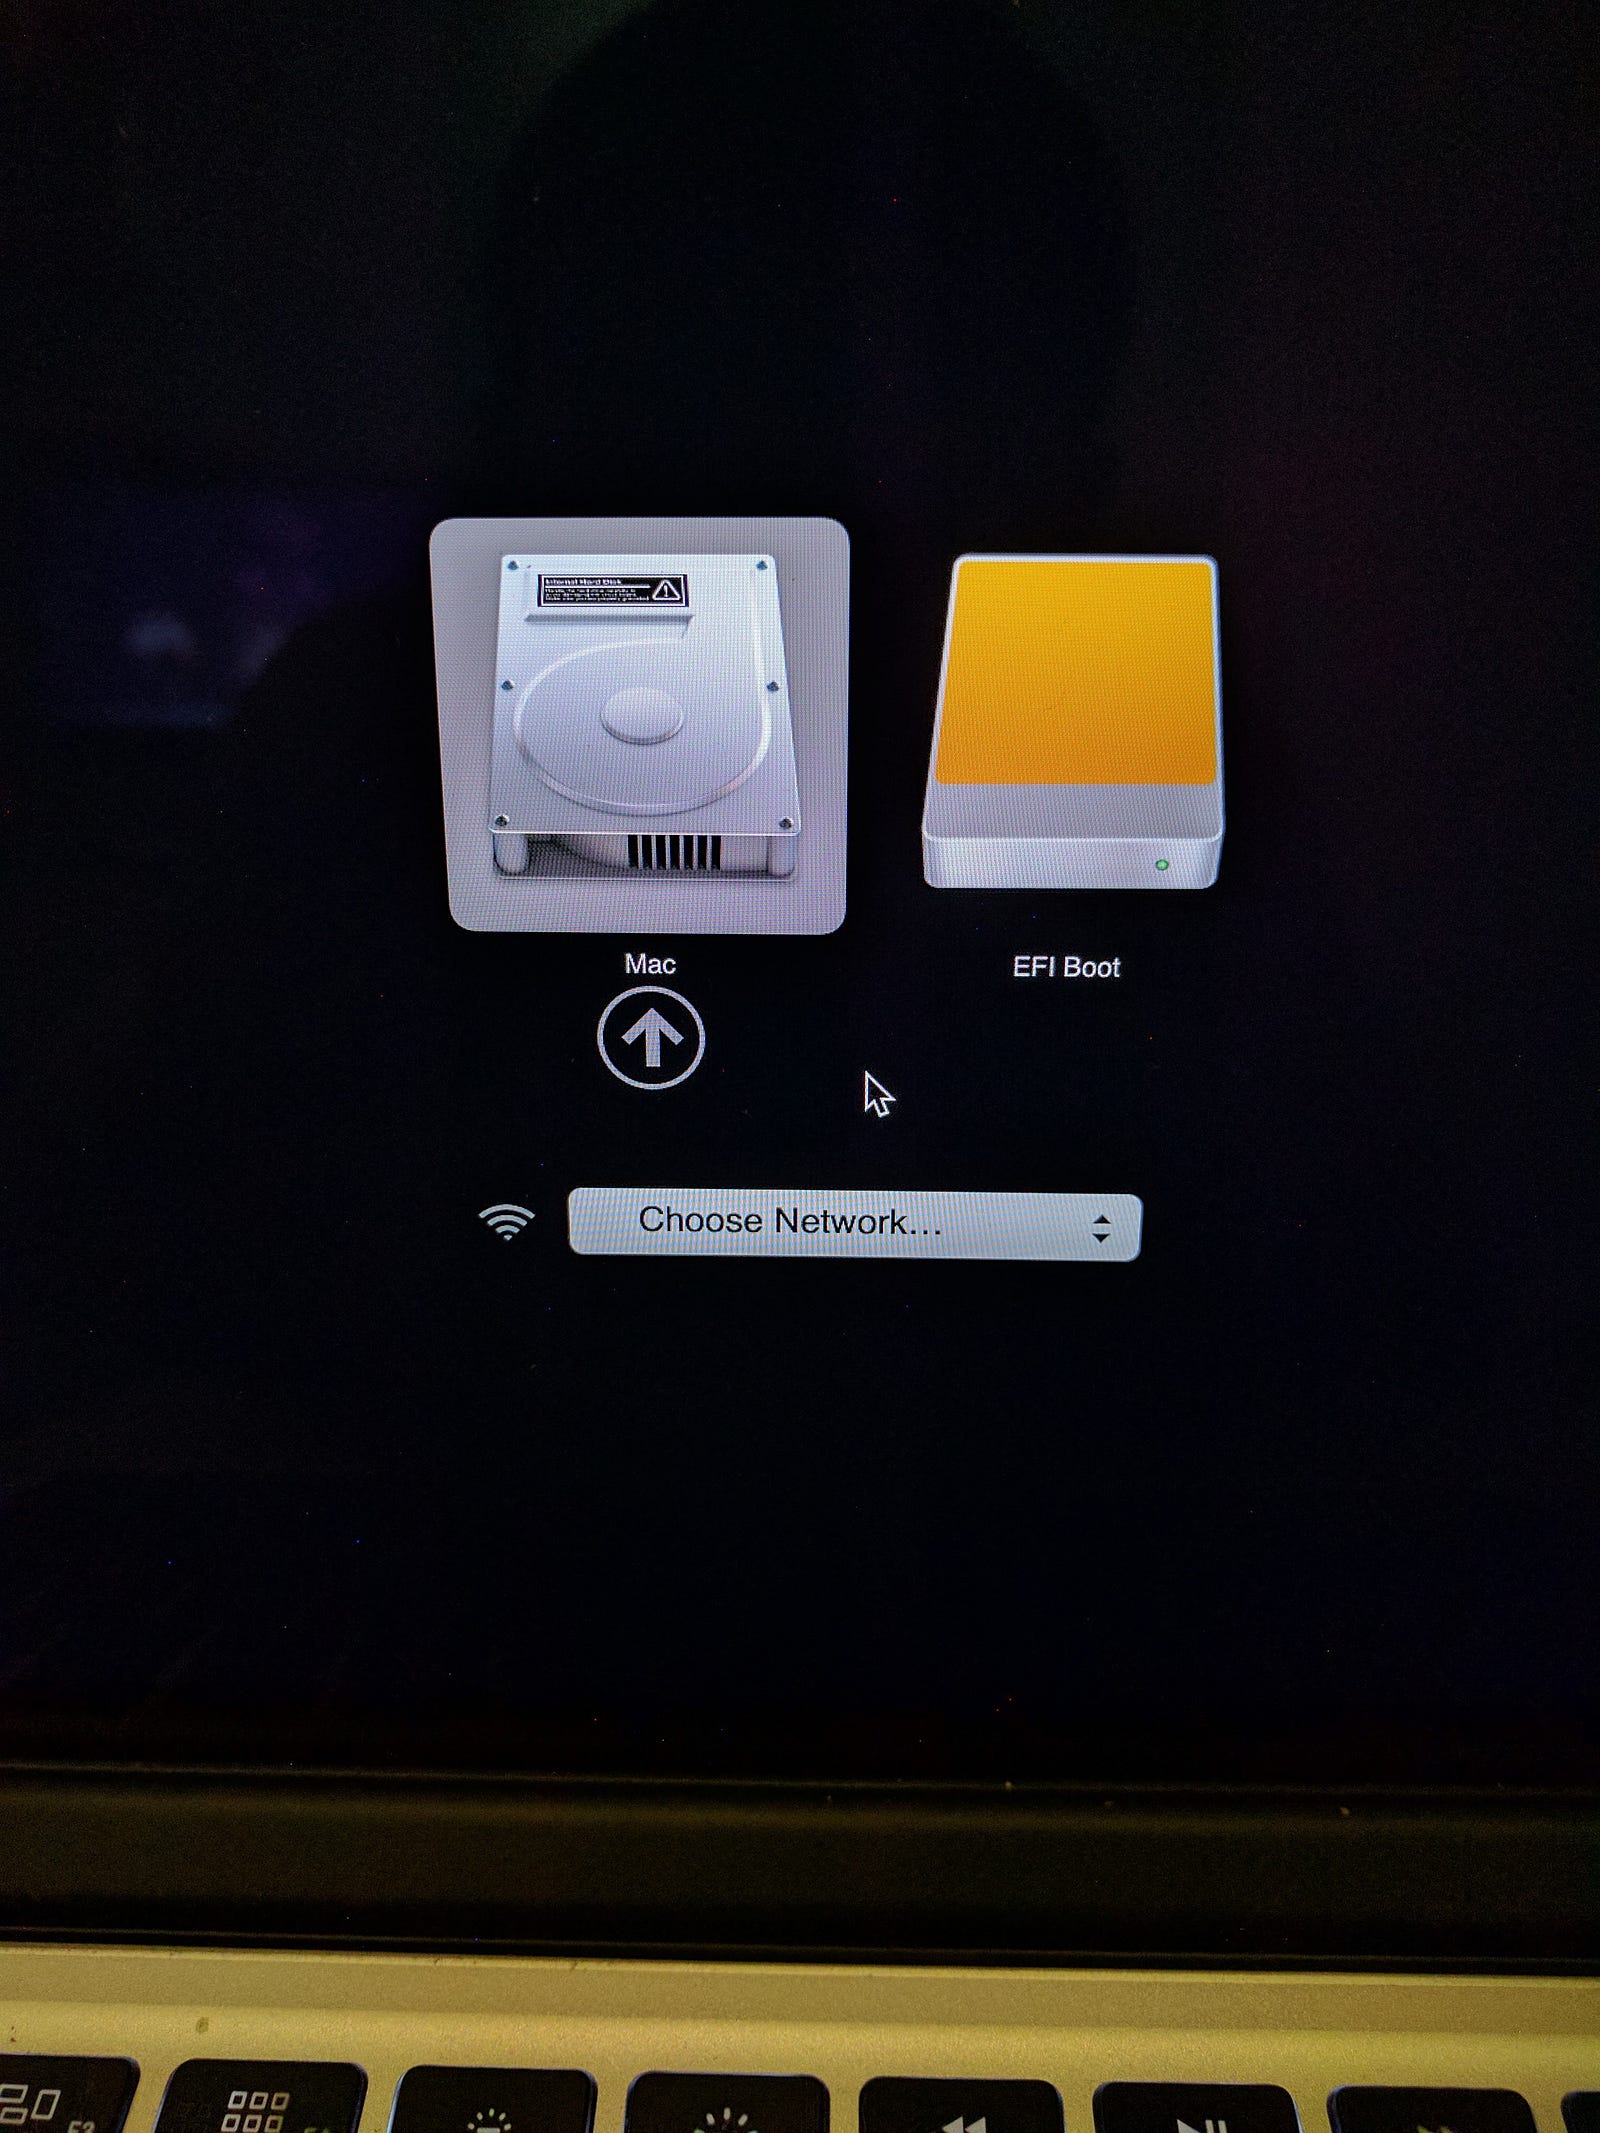 Download Ubuntu 17.10 Macbook Pro